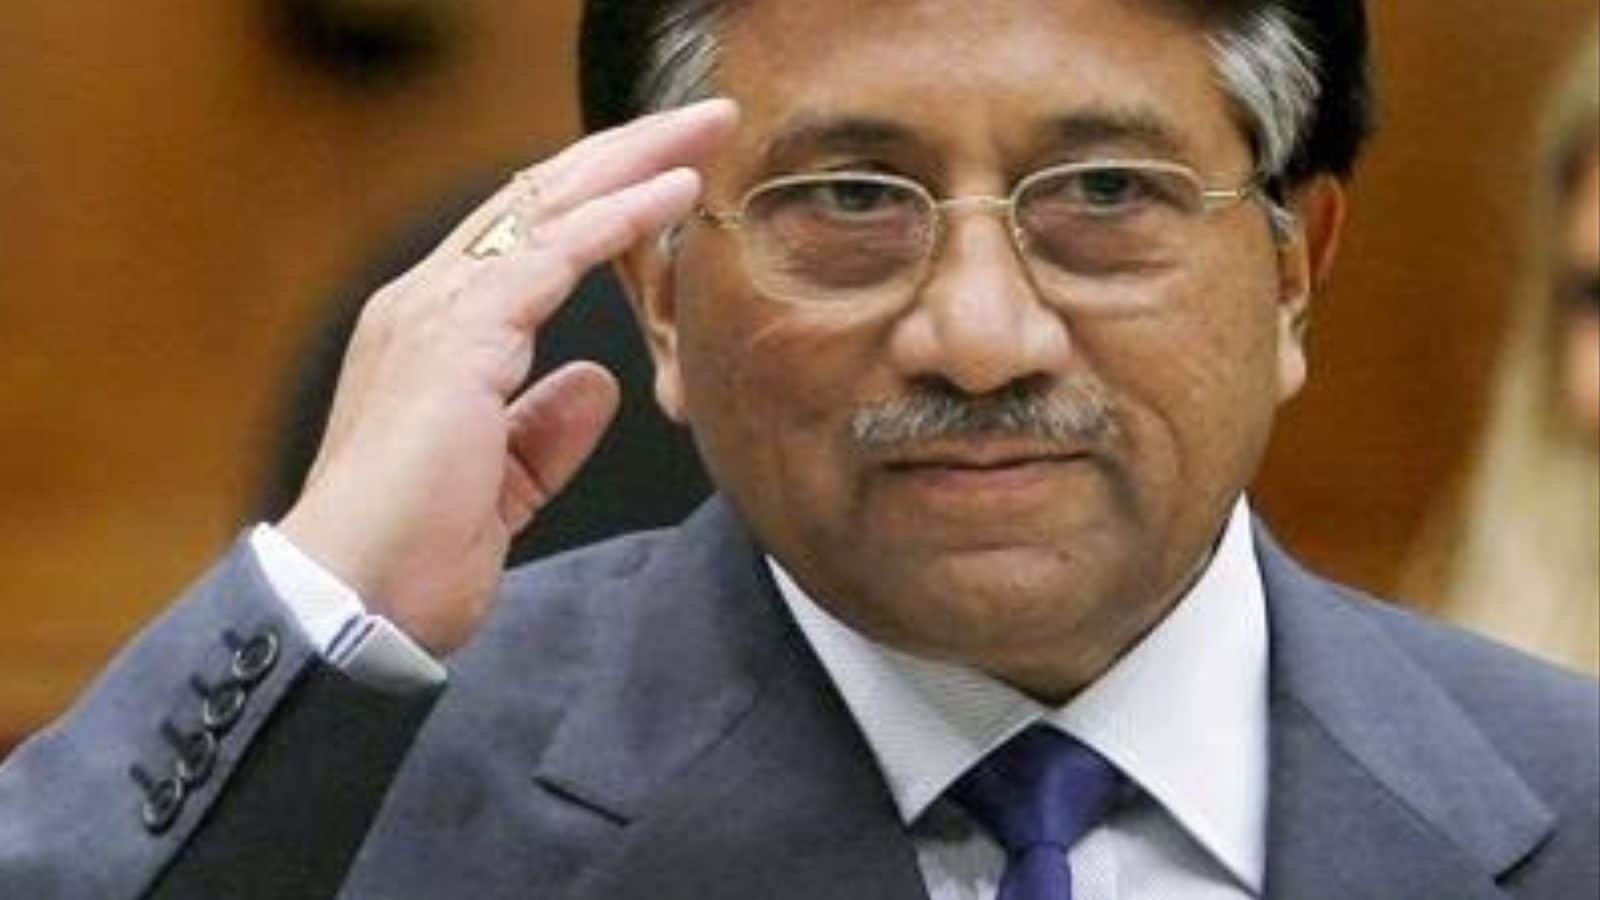 Pak Breeze Musharraf가 앓고 있는 희귀병, 아밀로이드증은 무엇입니까?  News18 설명